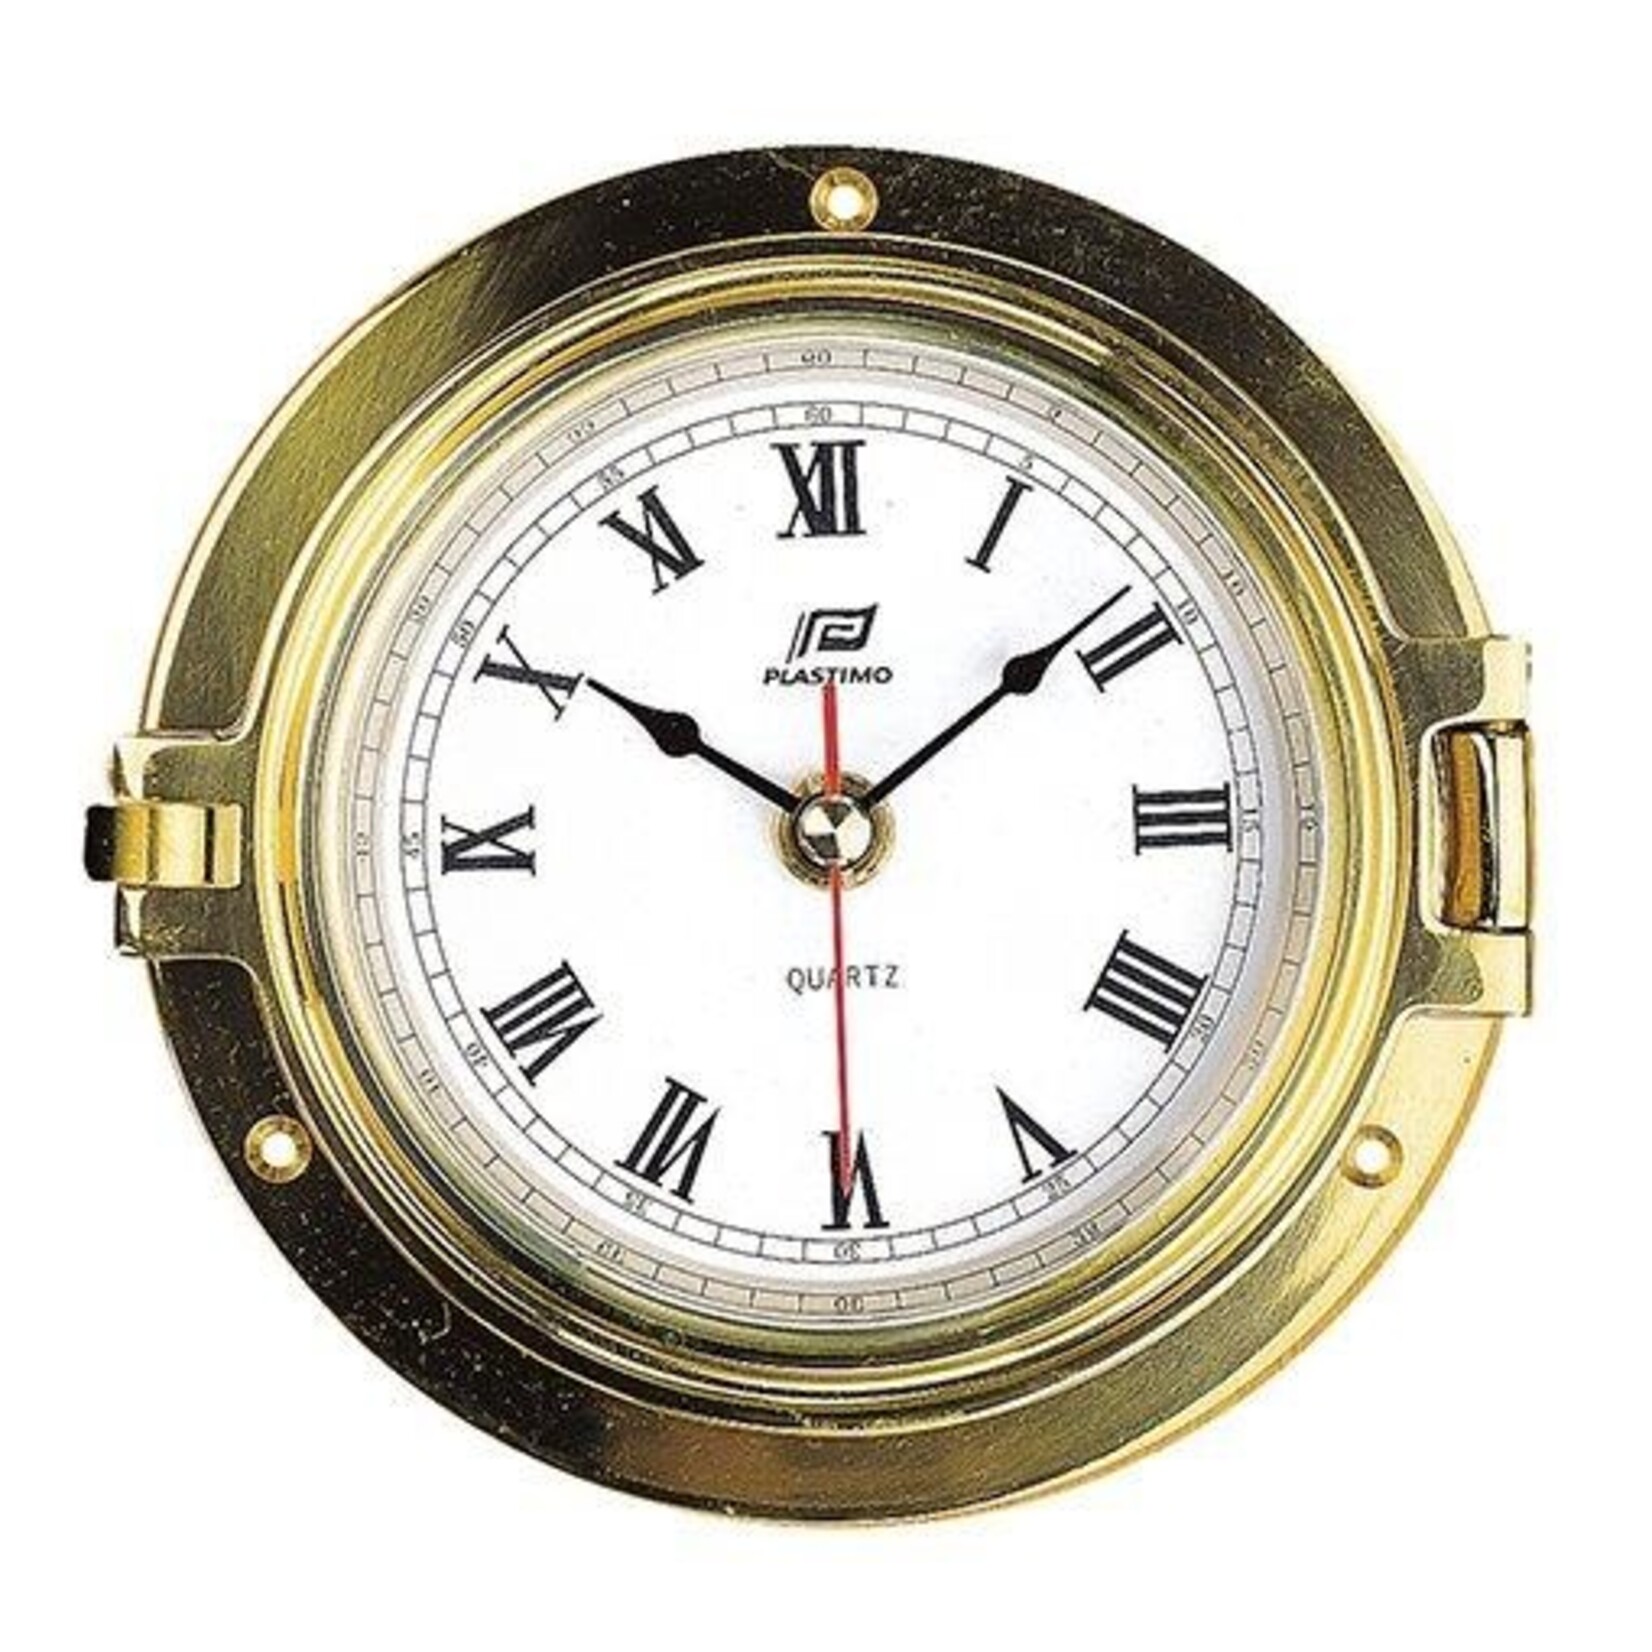 Plastimo Clock 4.5 solid brass